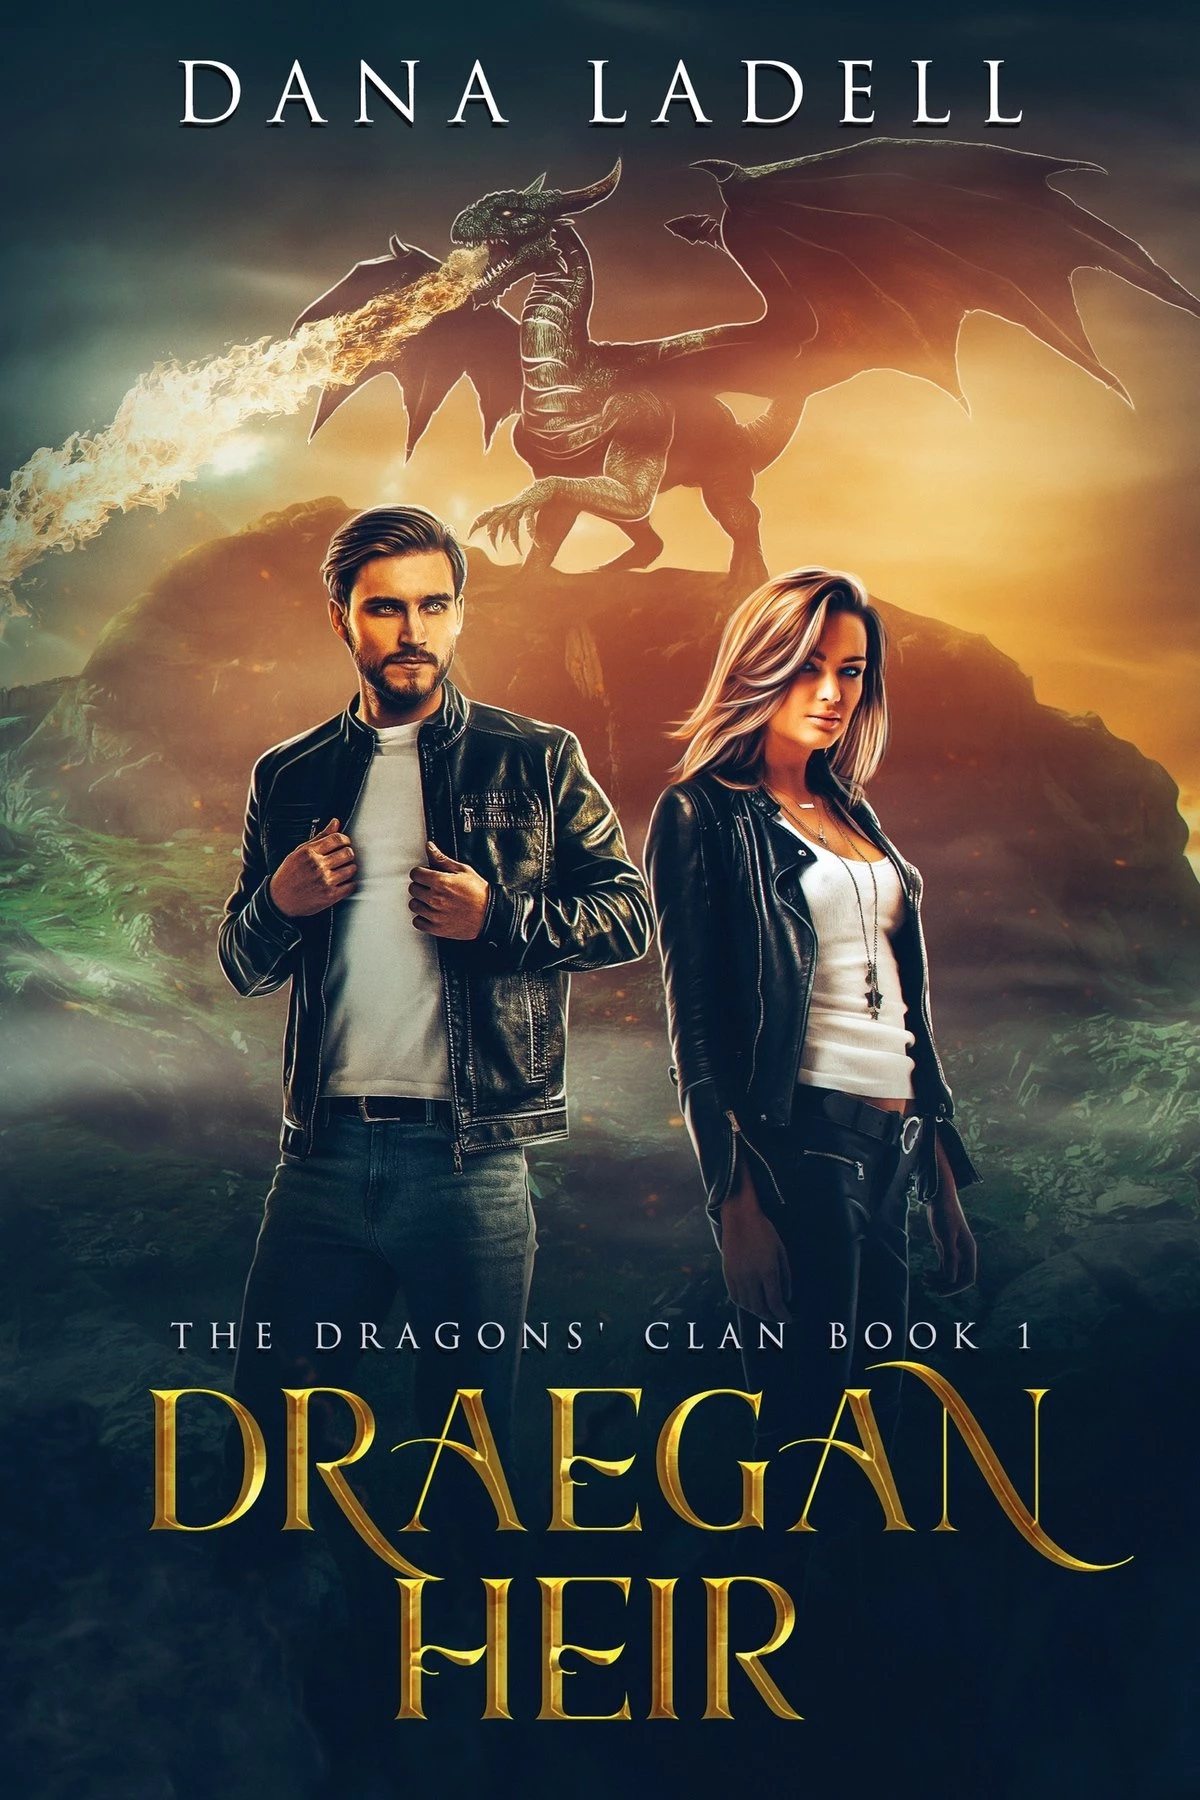 Draegan Heir: The Dragons’ Clan Book 1